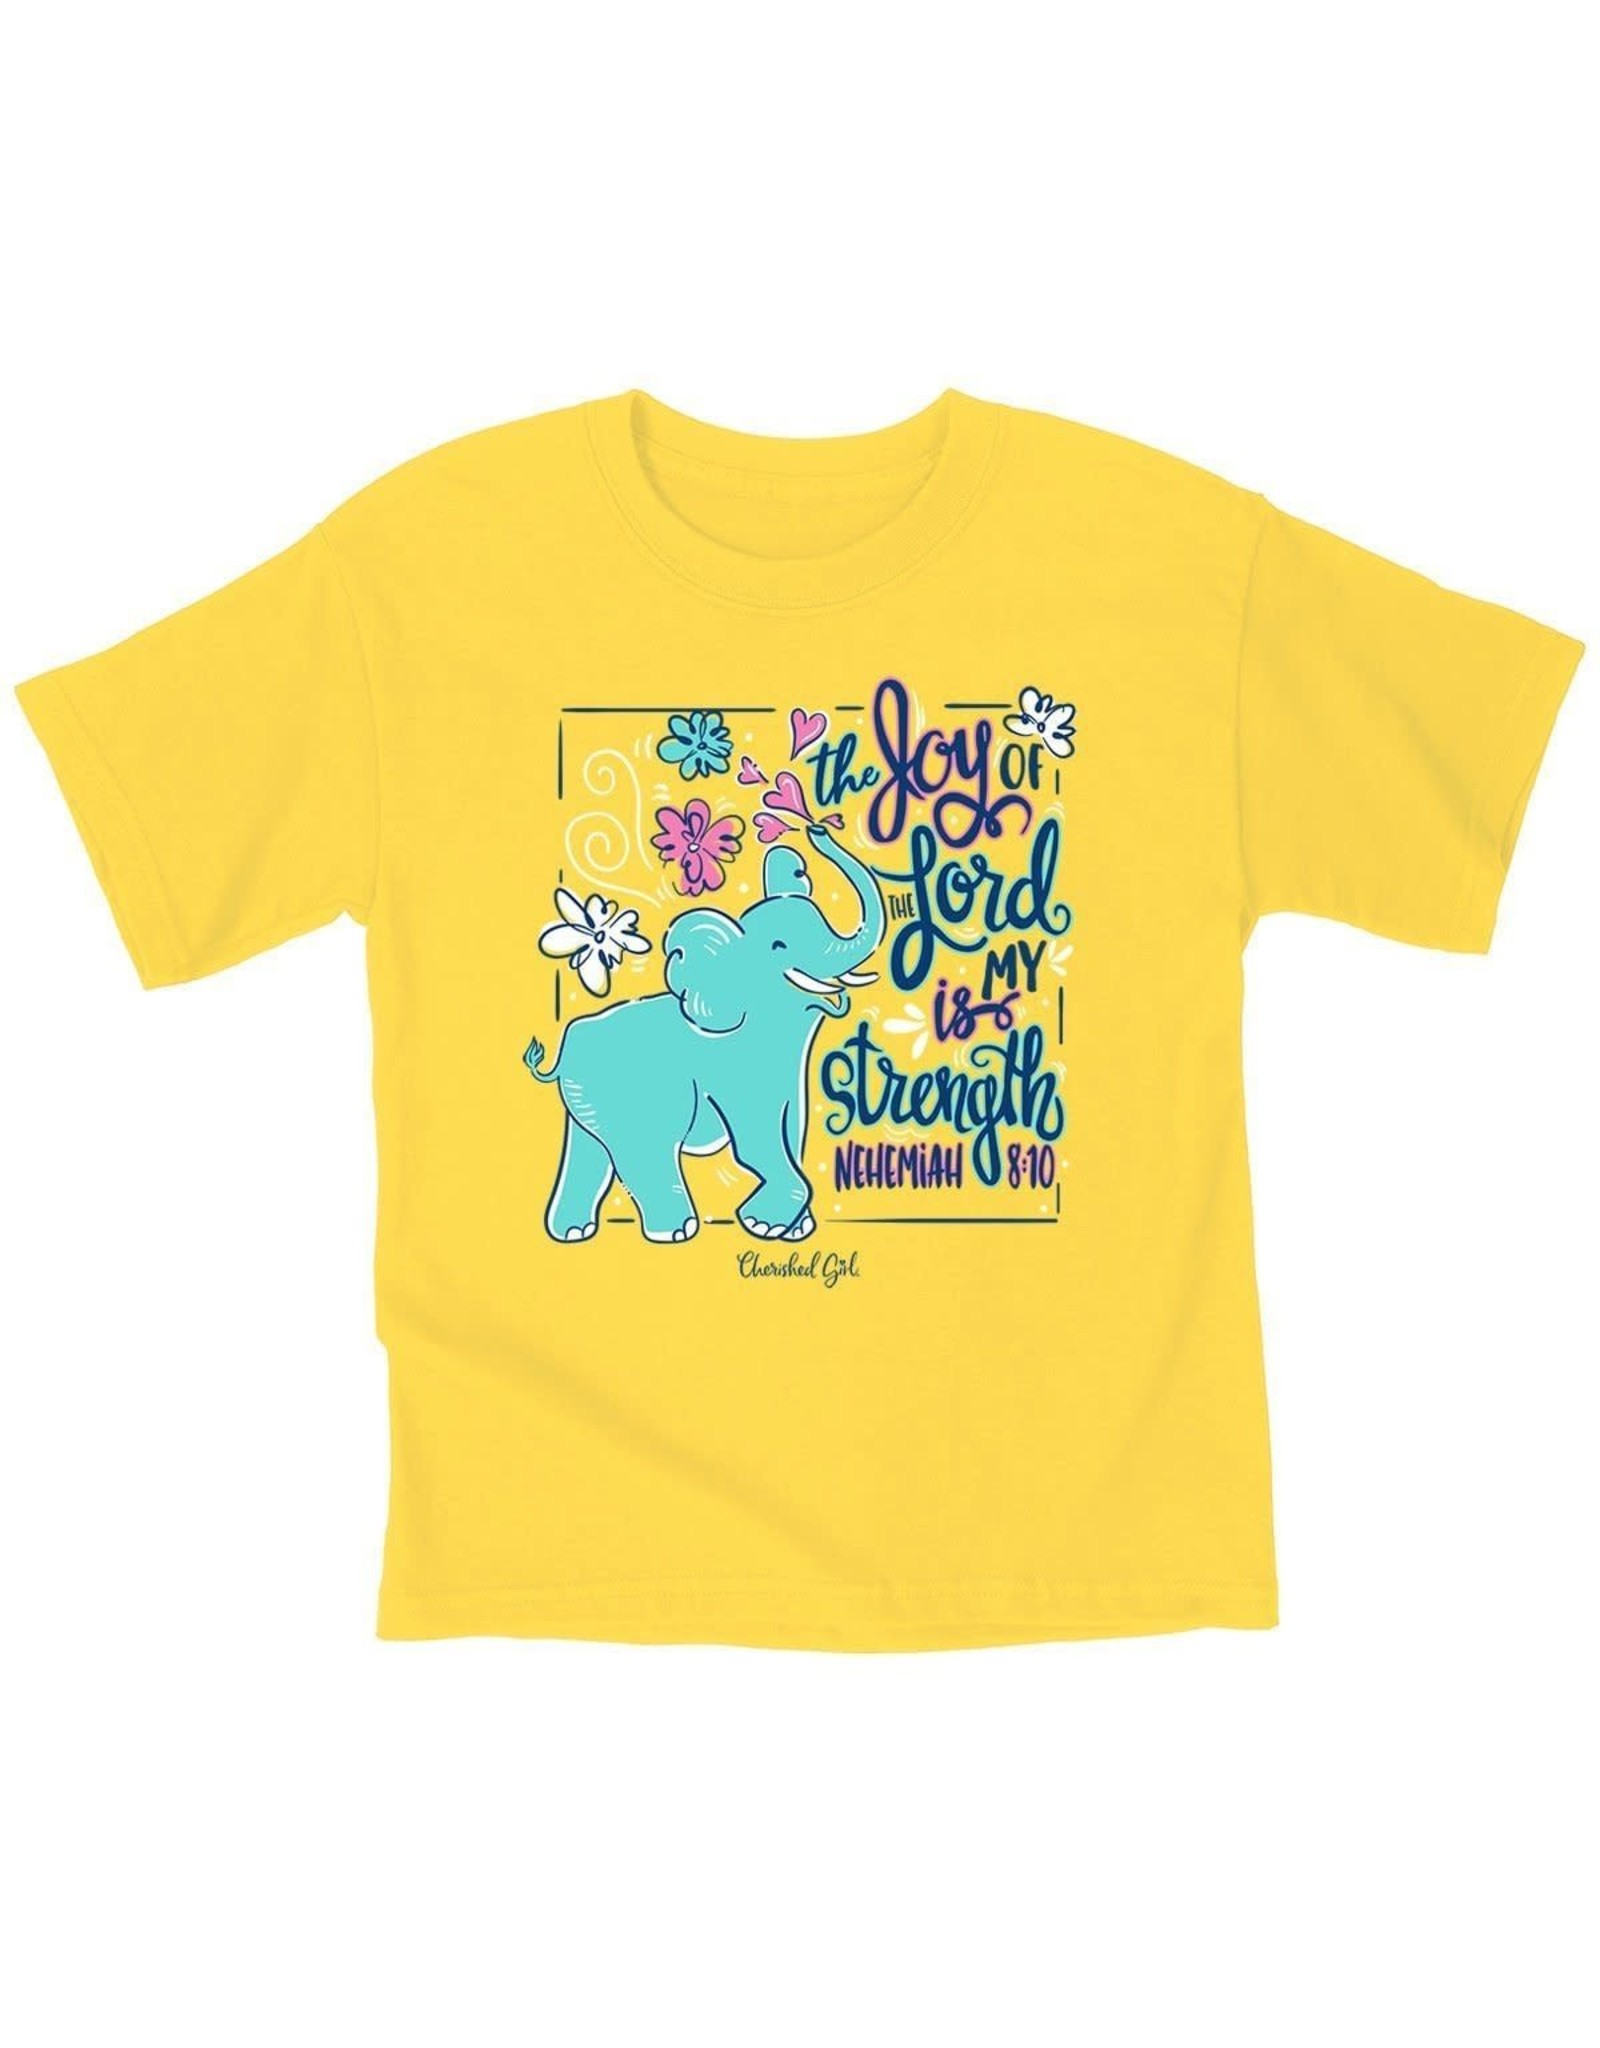 Kerusso Kidz Kids Shirt - Elephant, The Joy of the Lord